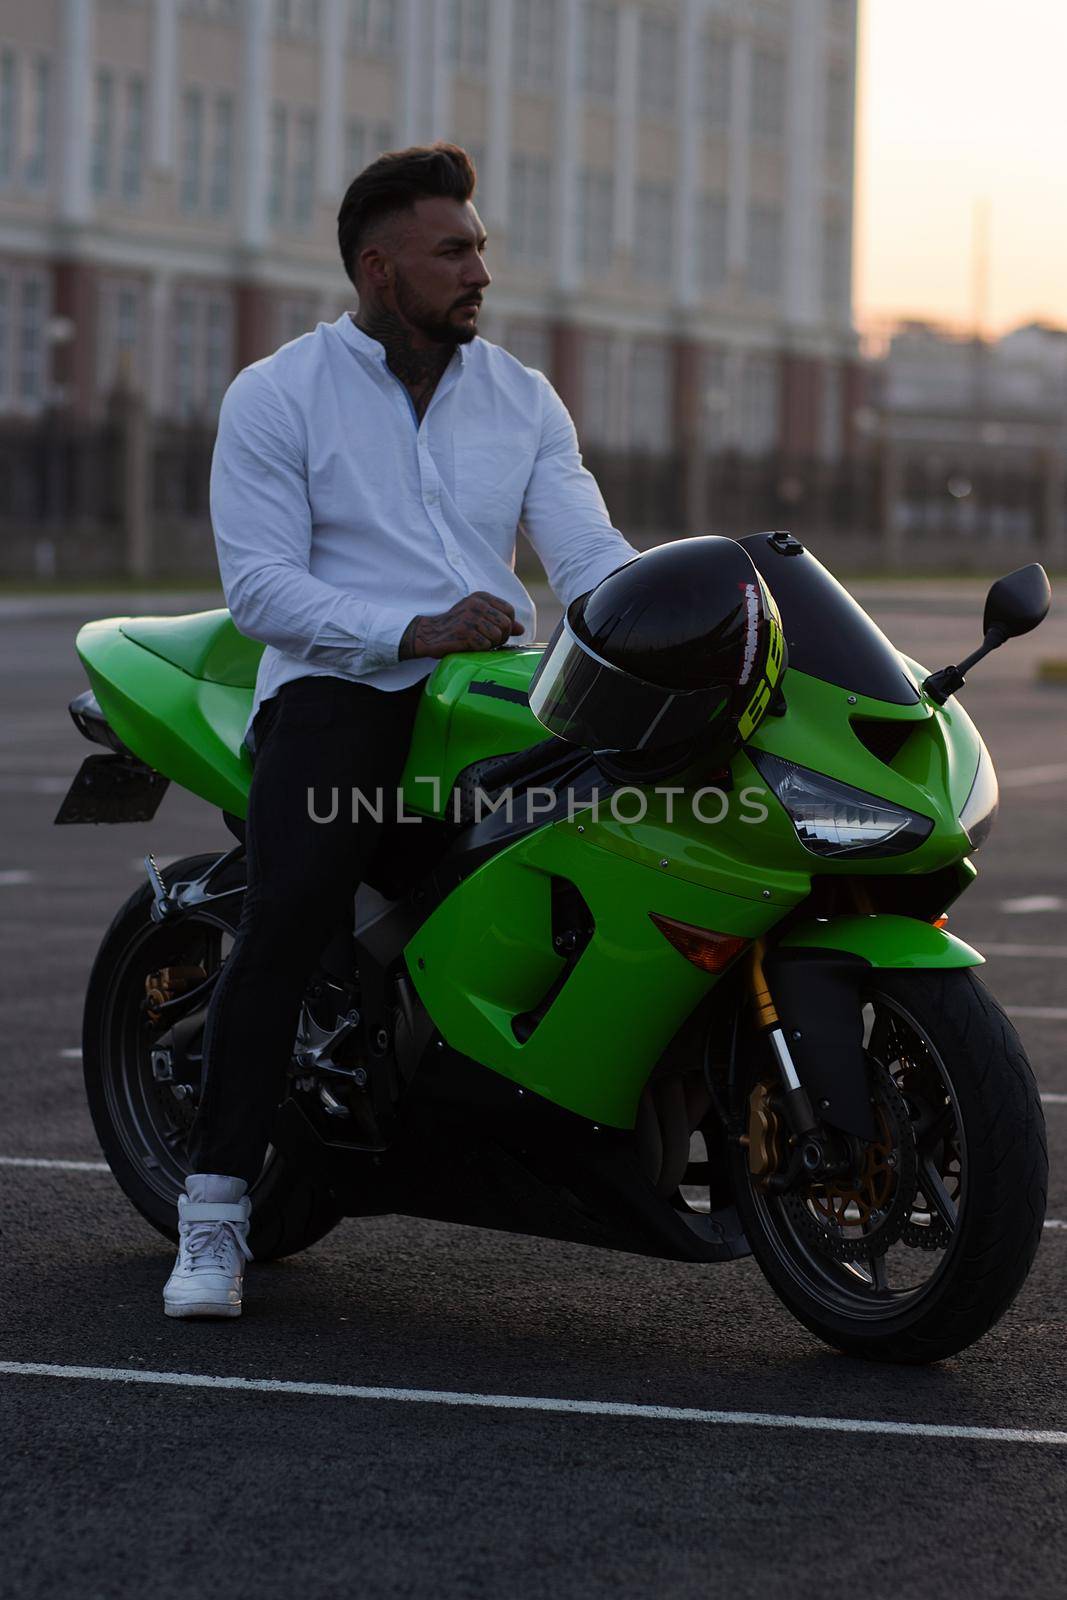 Stylish man on motorbike in evening by 3KStudio